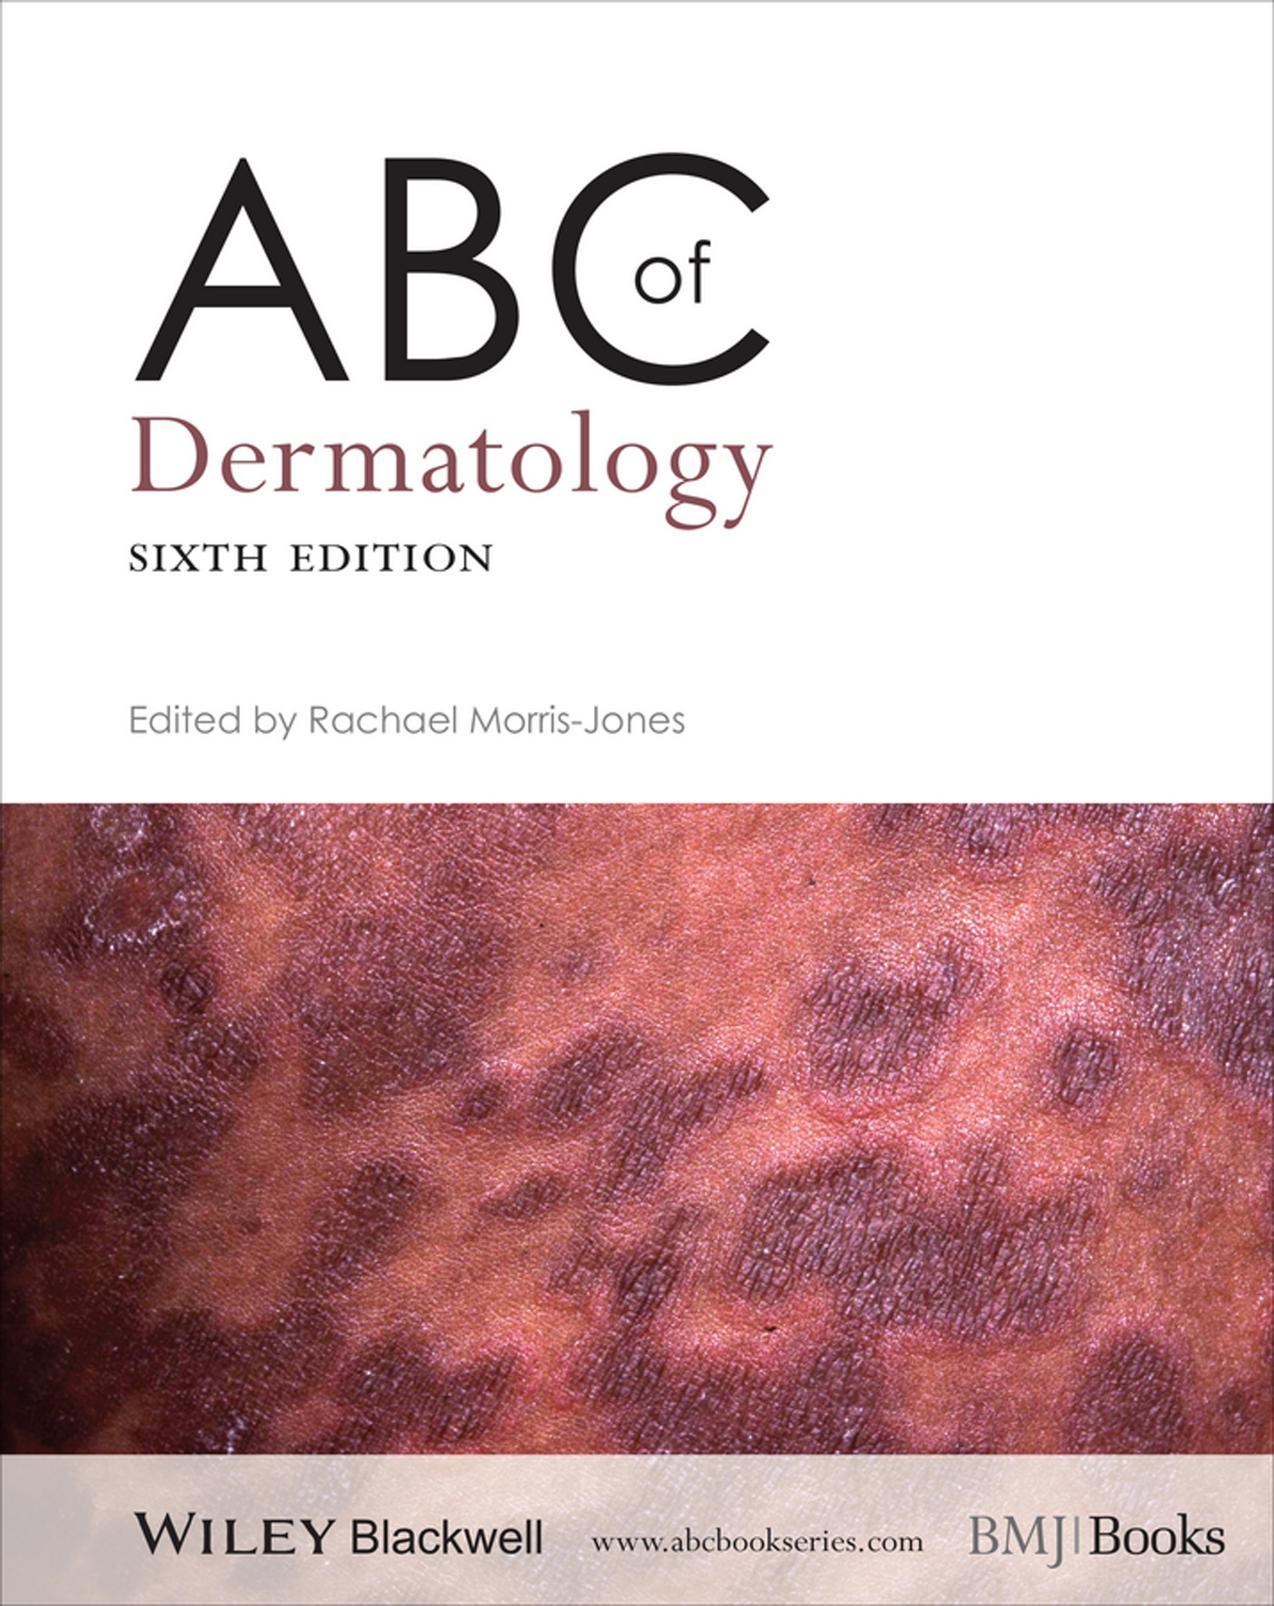 ABC of Dermatology 6th Edition by Morris-Jones, Rachael.jpg